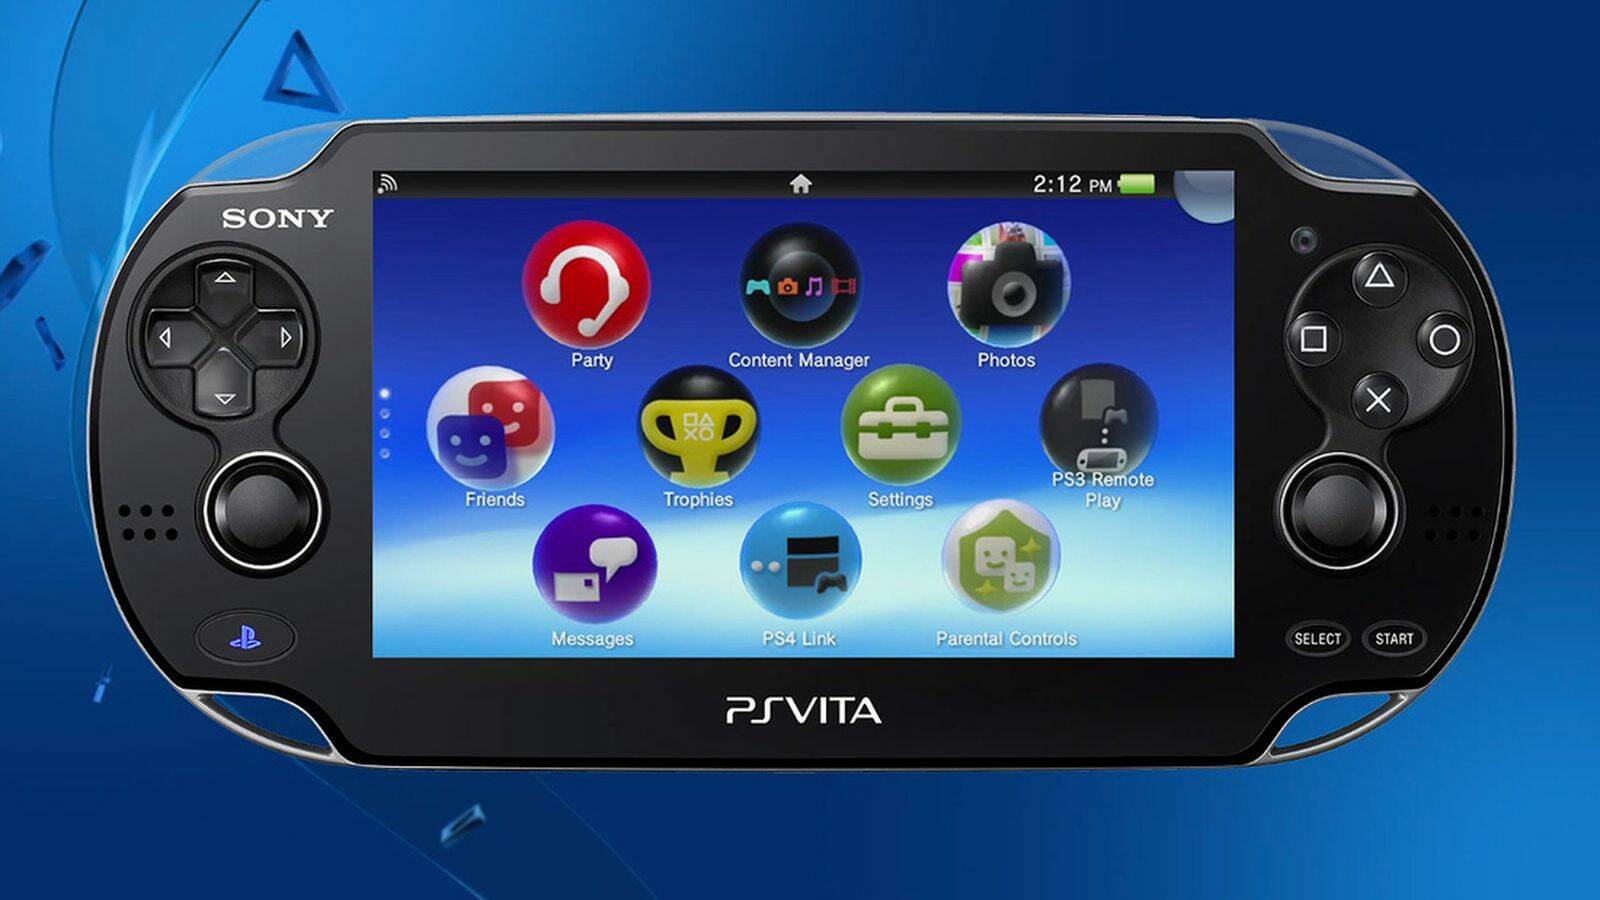 Ex Sony rivela: "ecco perché PS Vita ha memory card proprietarie"